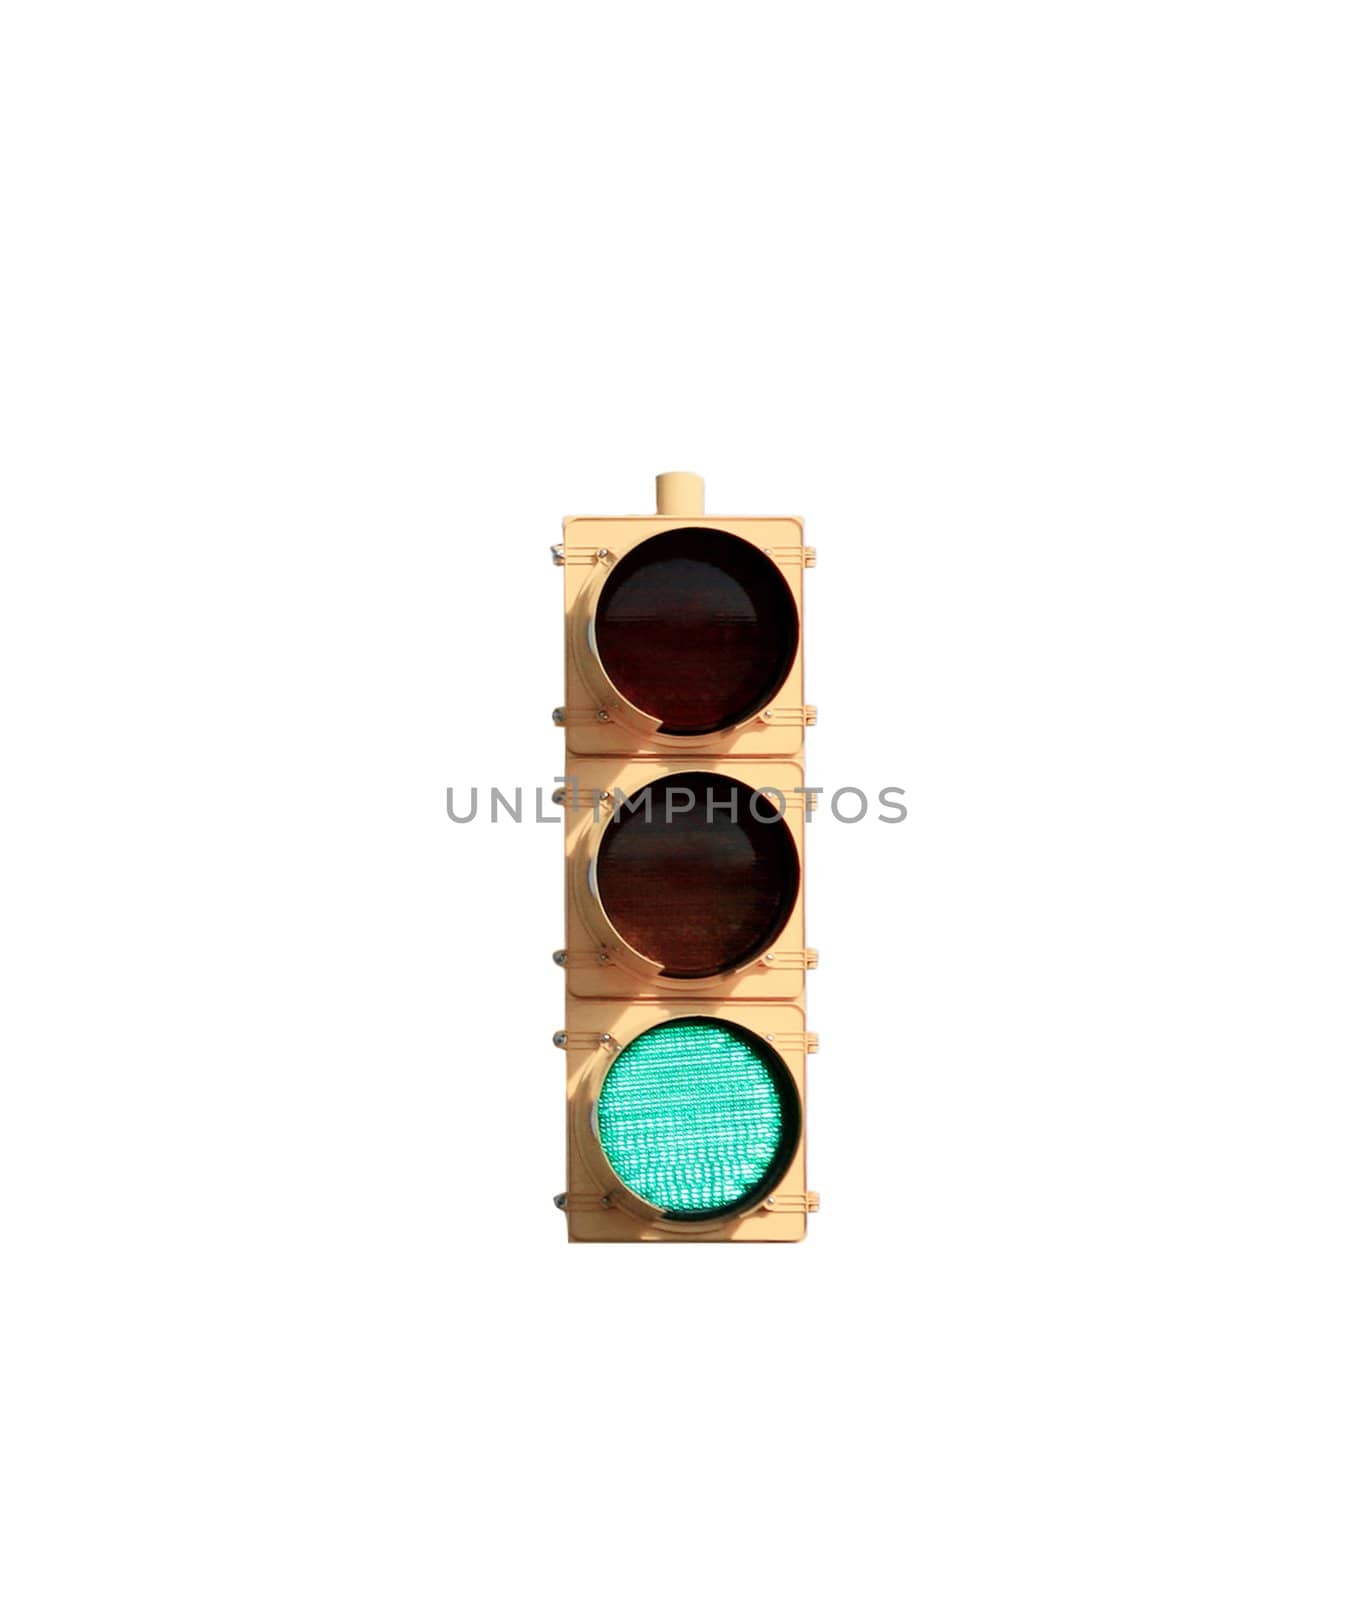 Green traffic signal light